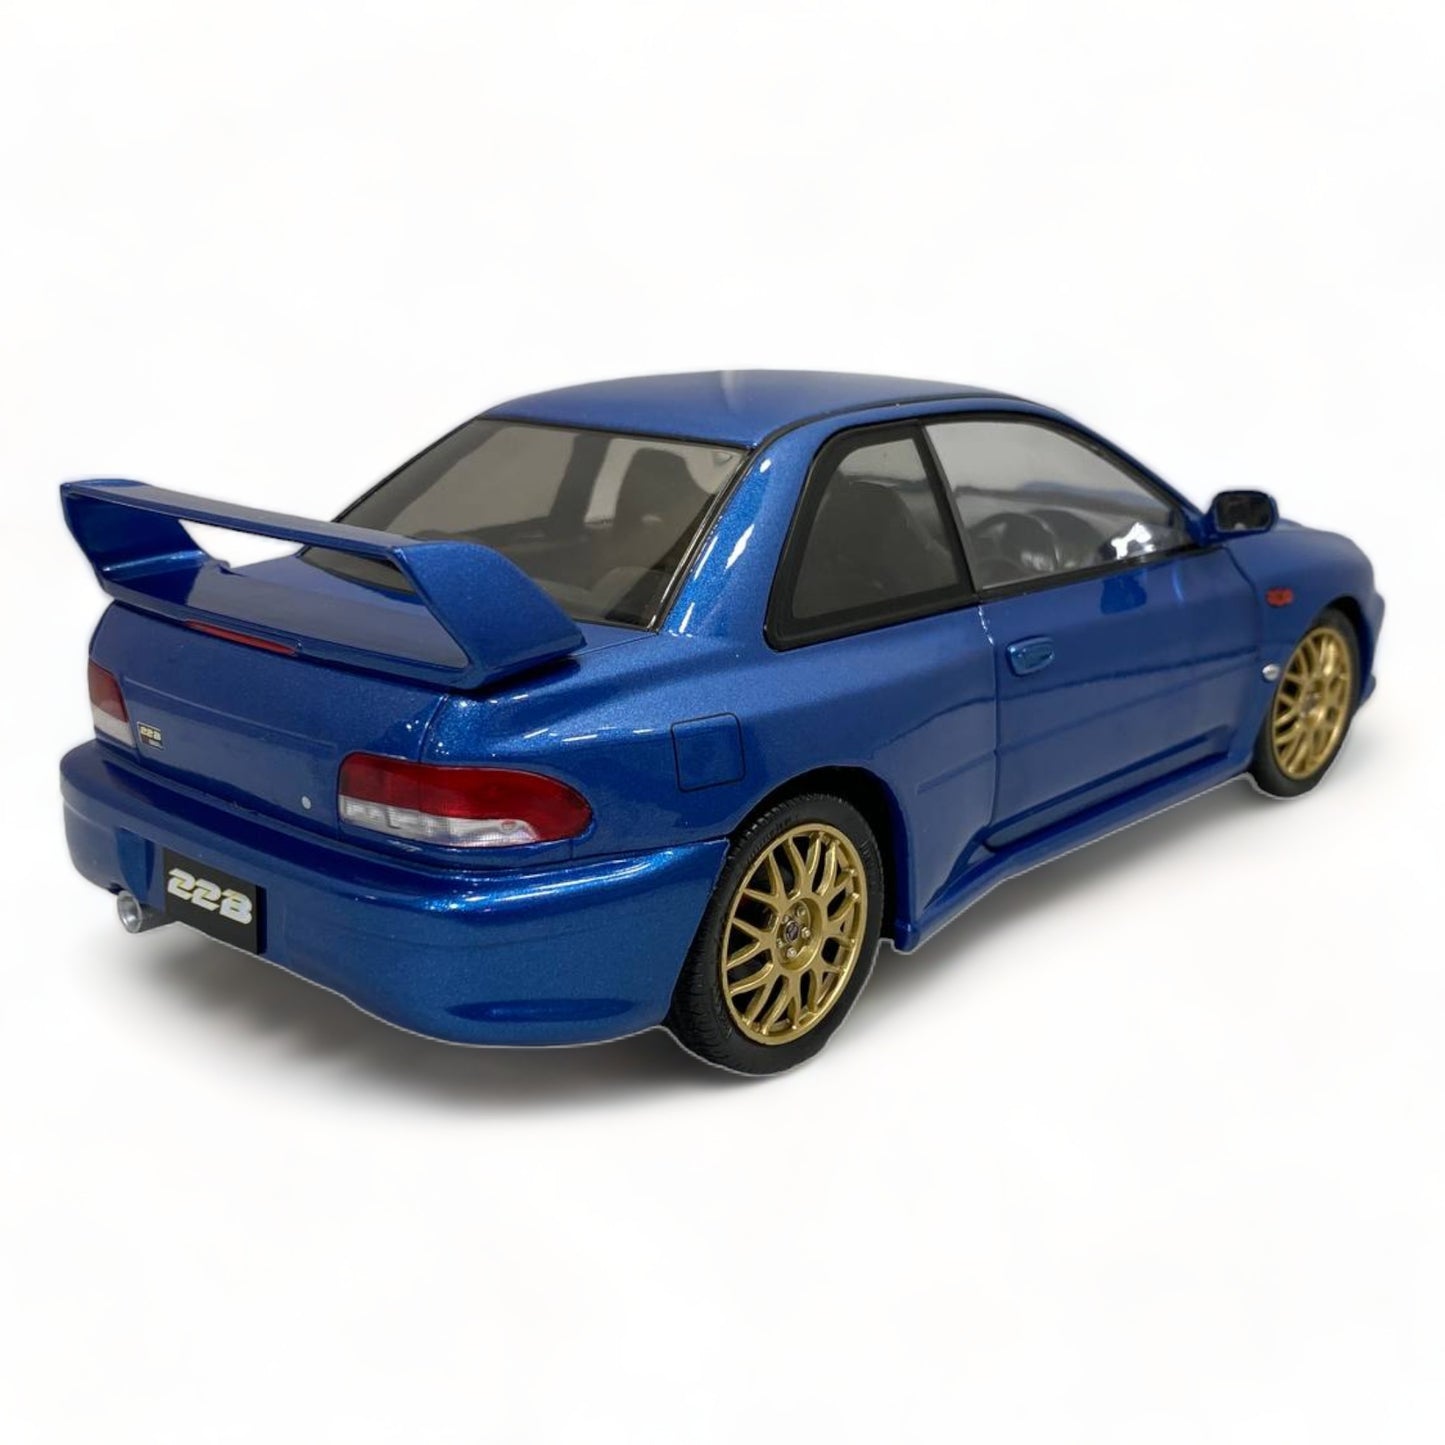 1/18 Solido Subaru Impreza 22B STI Version BLUE 1998 Model Car|Sold in Dturman.com Dubai UAE.